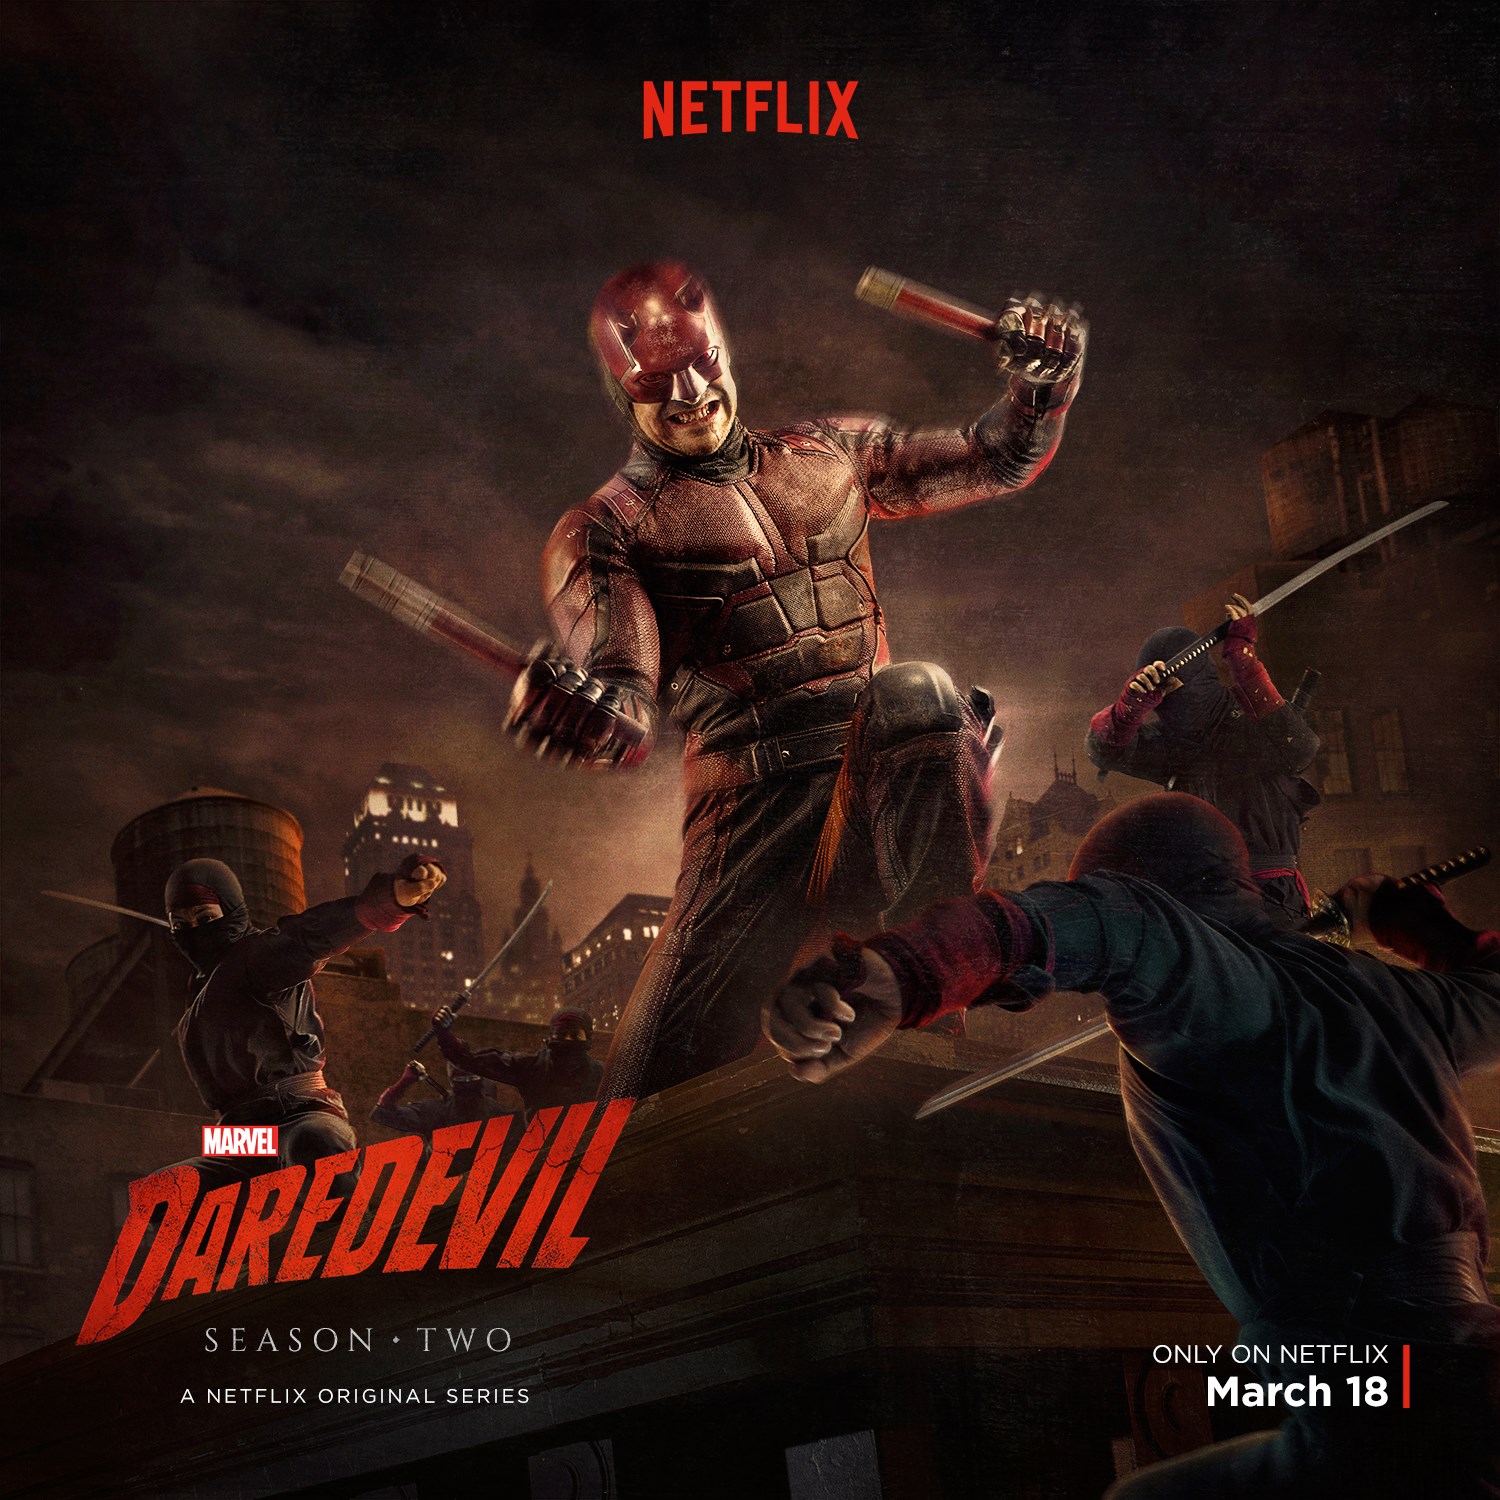 daredevil season 1 online free